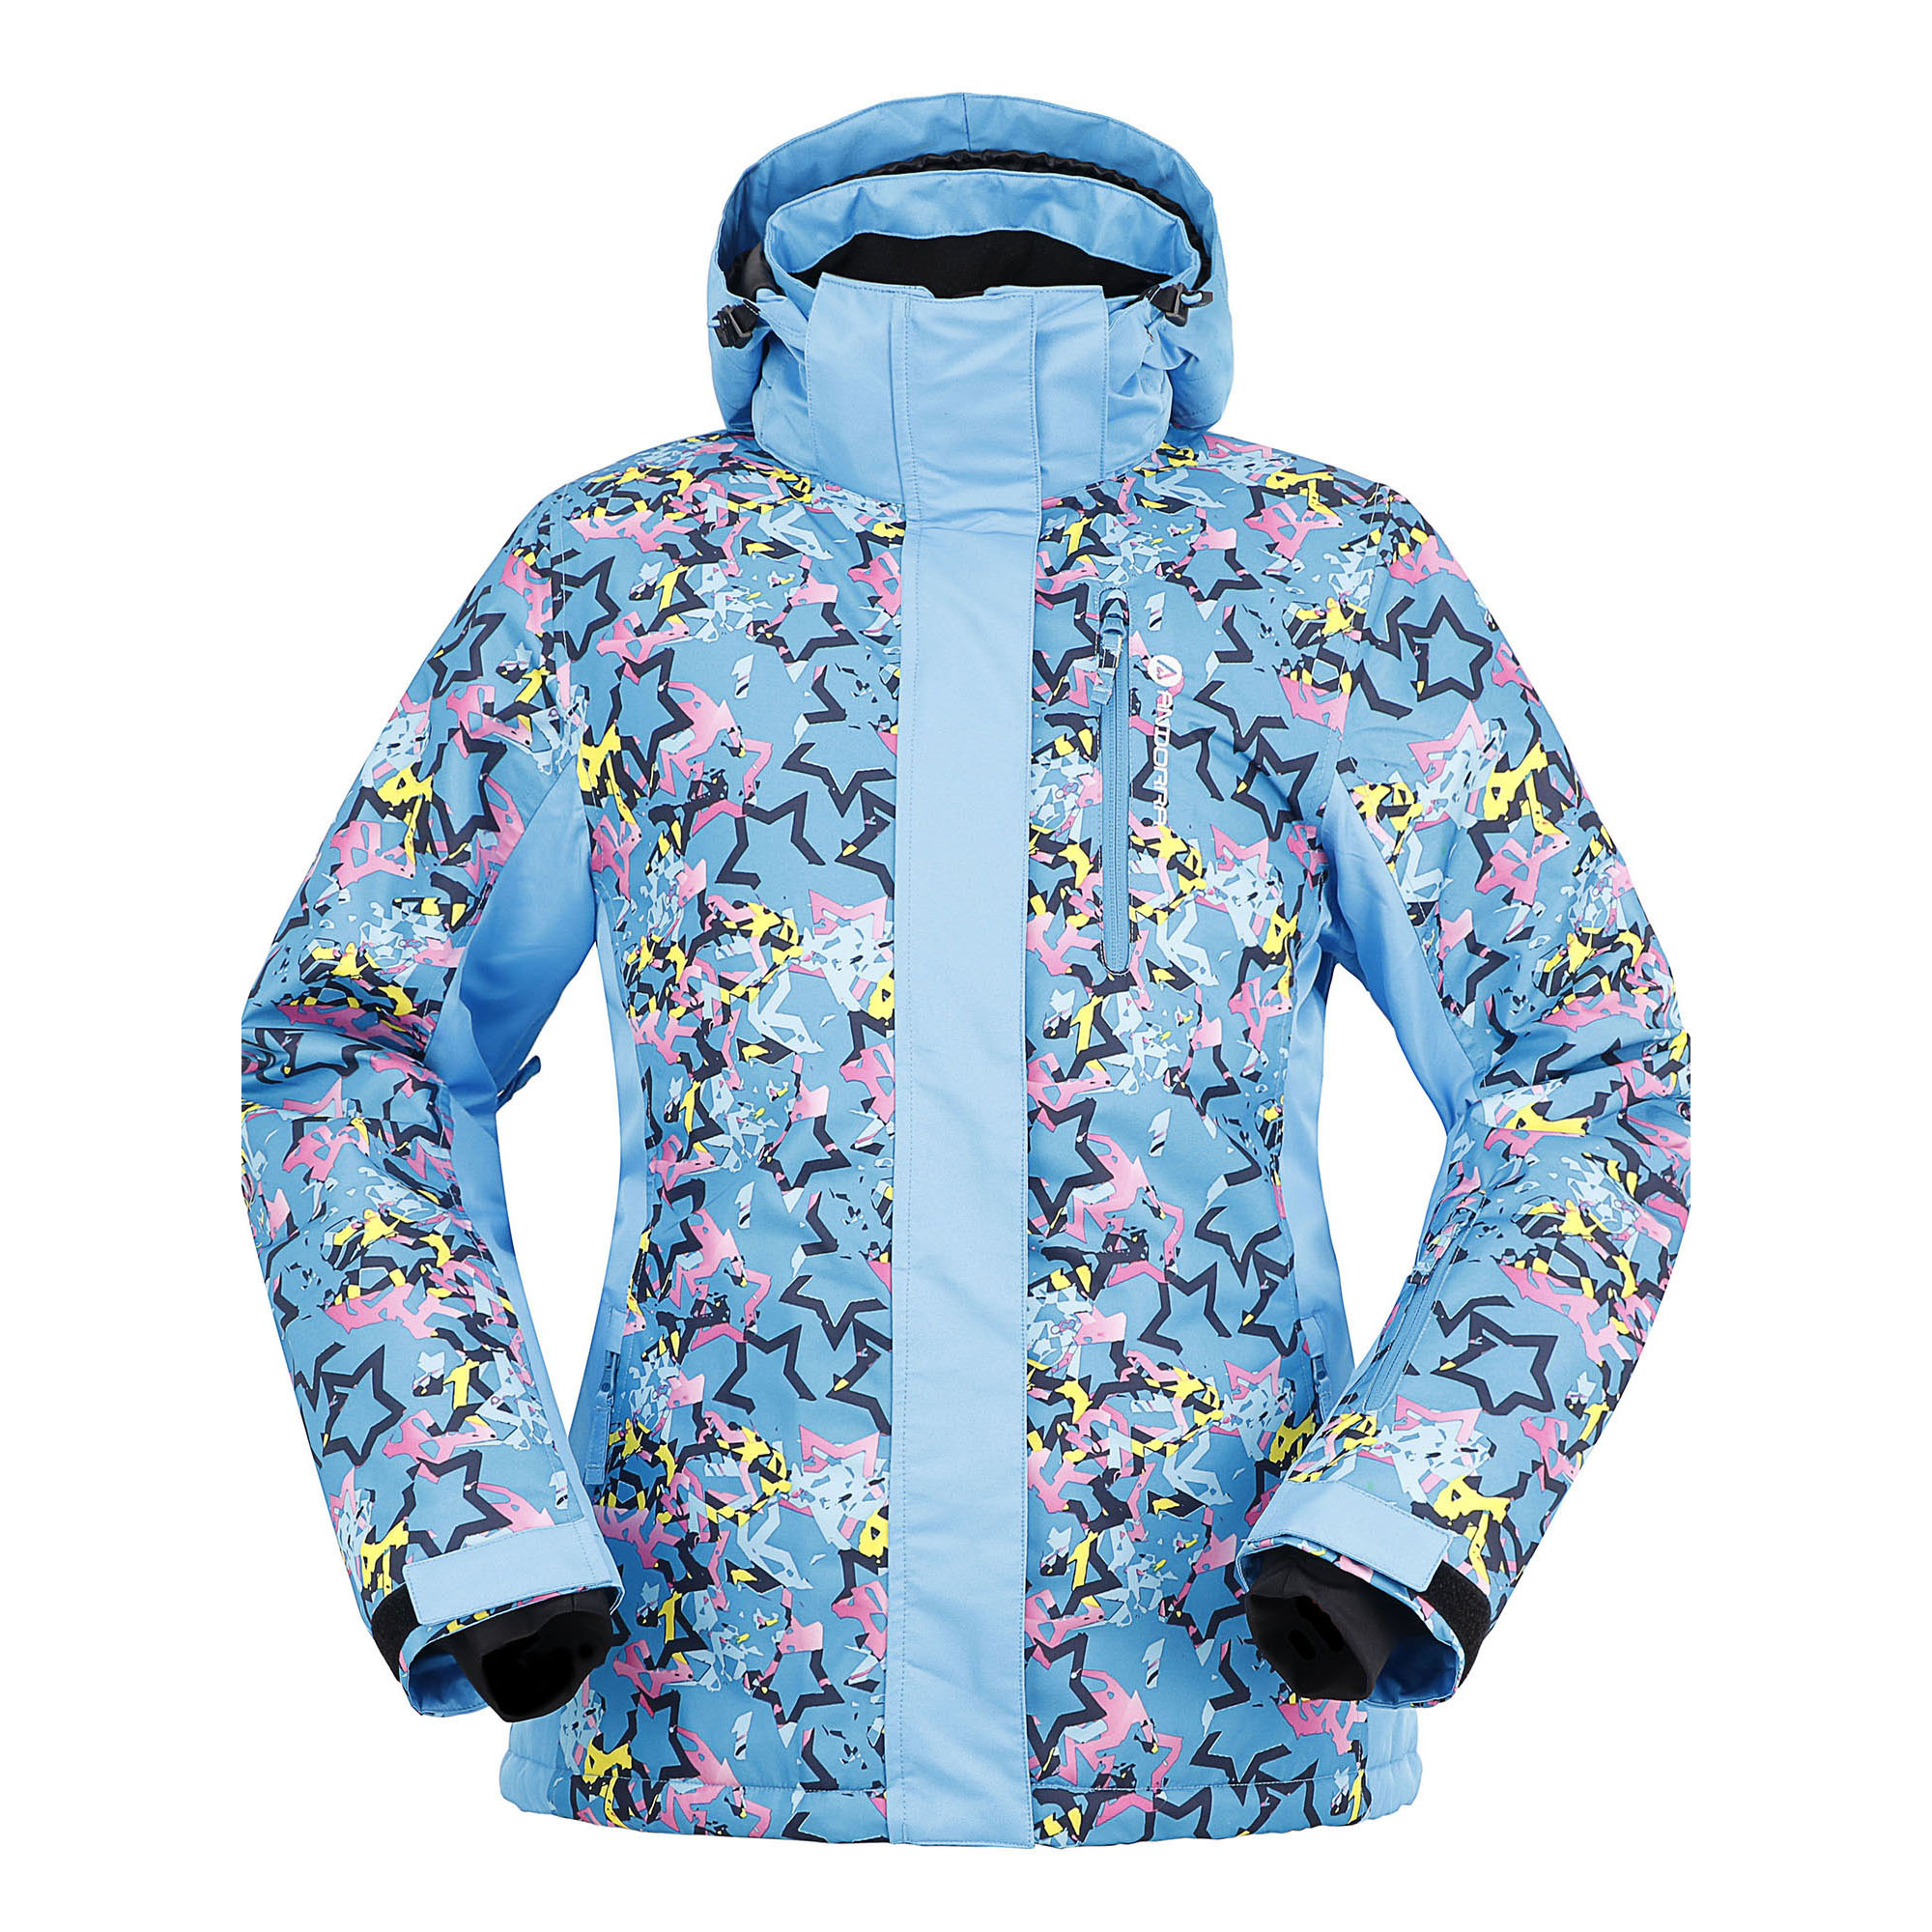 Simplicity Women's Winter Ski Jacket with Zip-Off Hood,Retro Blue Starbursts,M - image 1 of 4